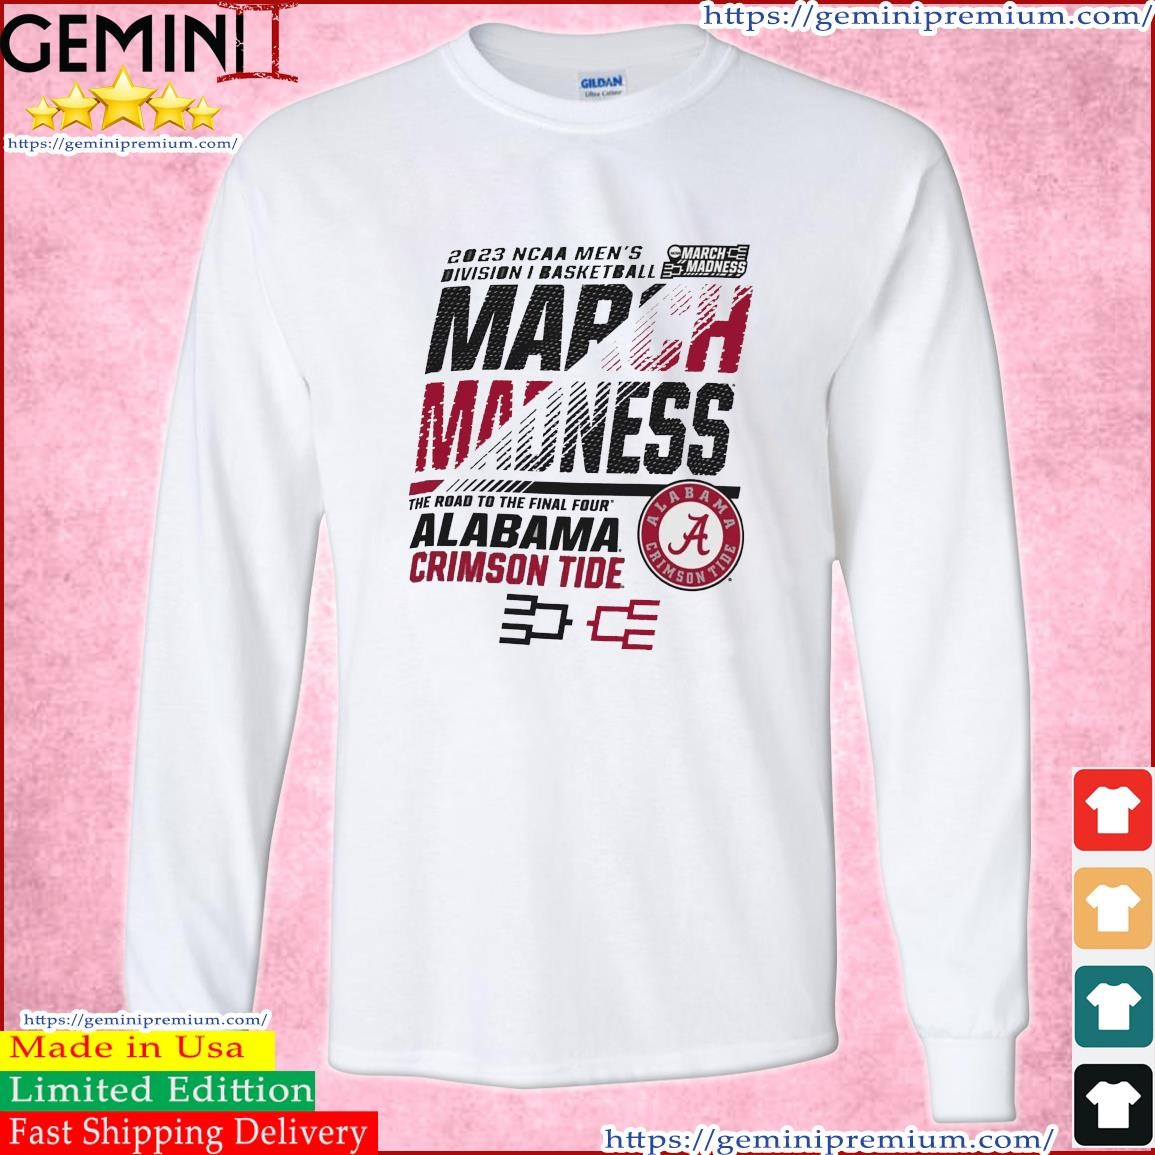 Alabama Crimson Tide Men's Basketball 2023 NCAA March Madness The Road To Final Four Shirt Long Sleeve Tee.jpg